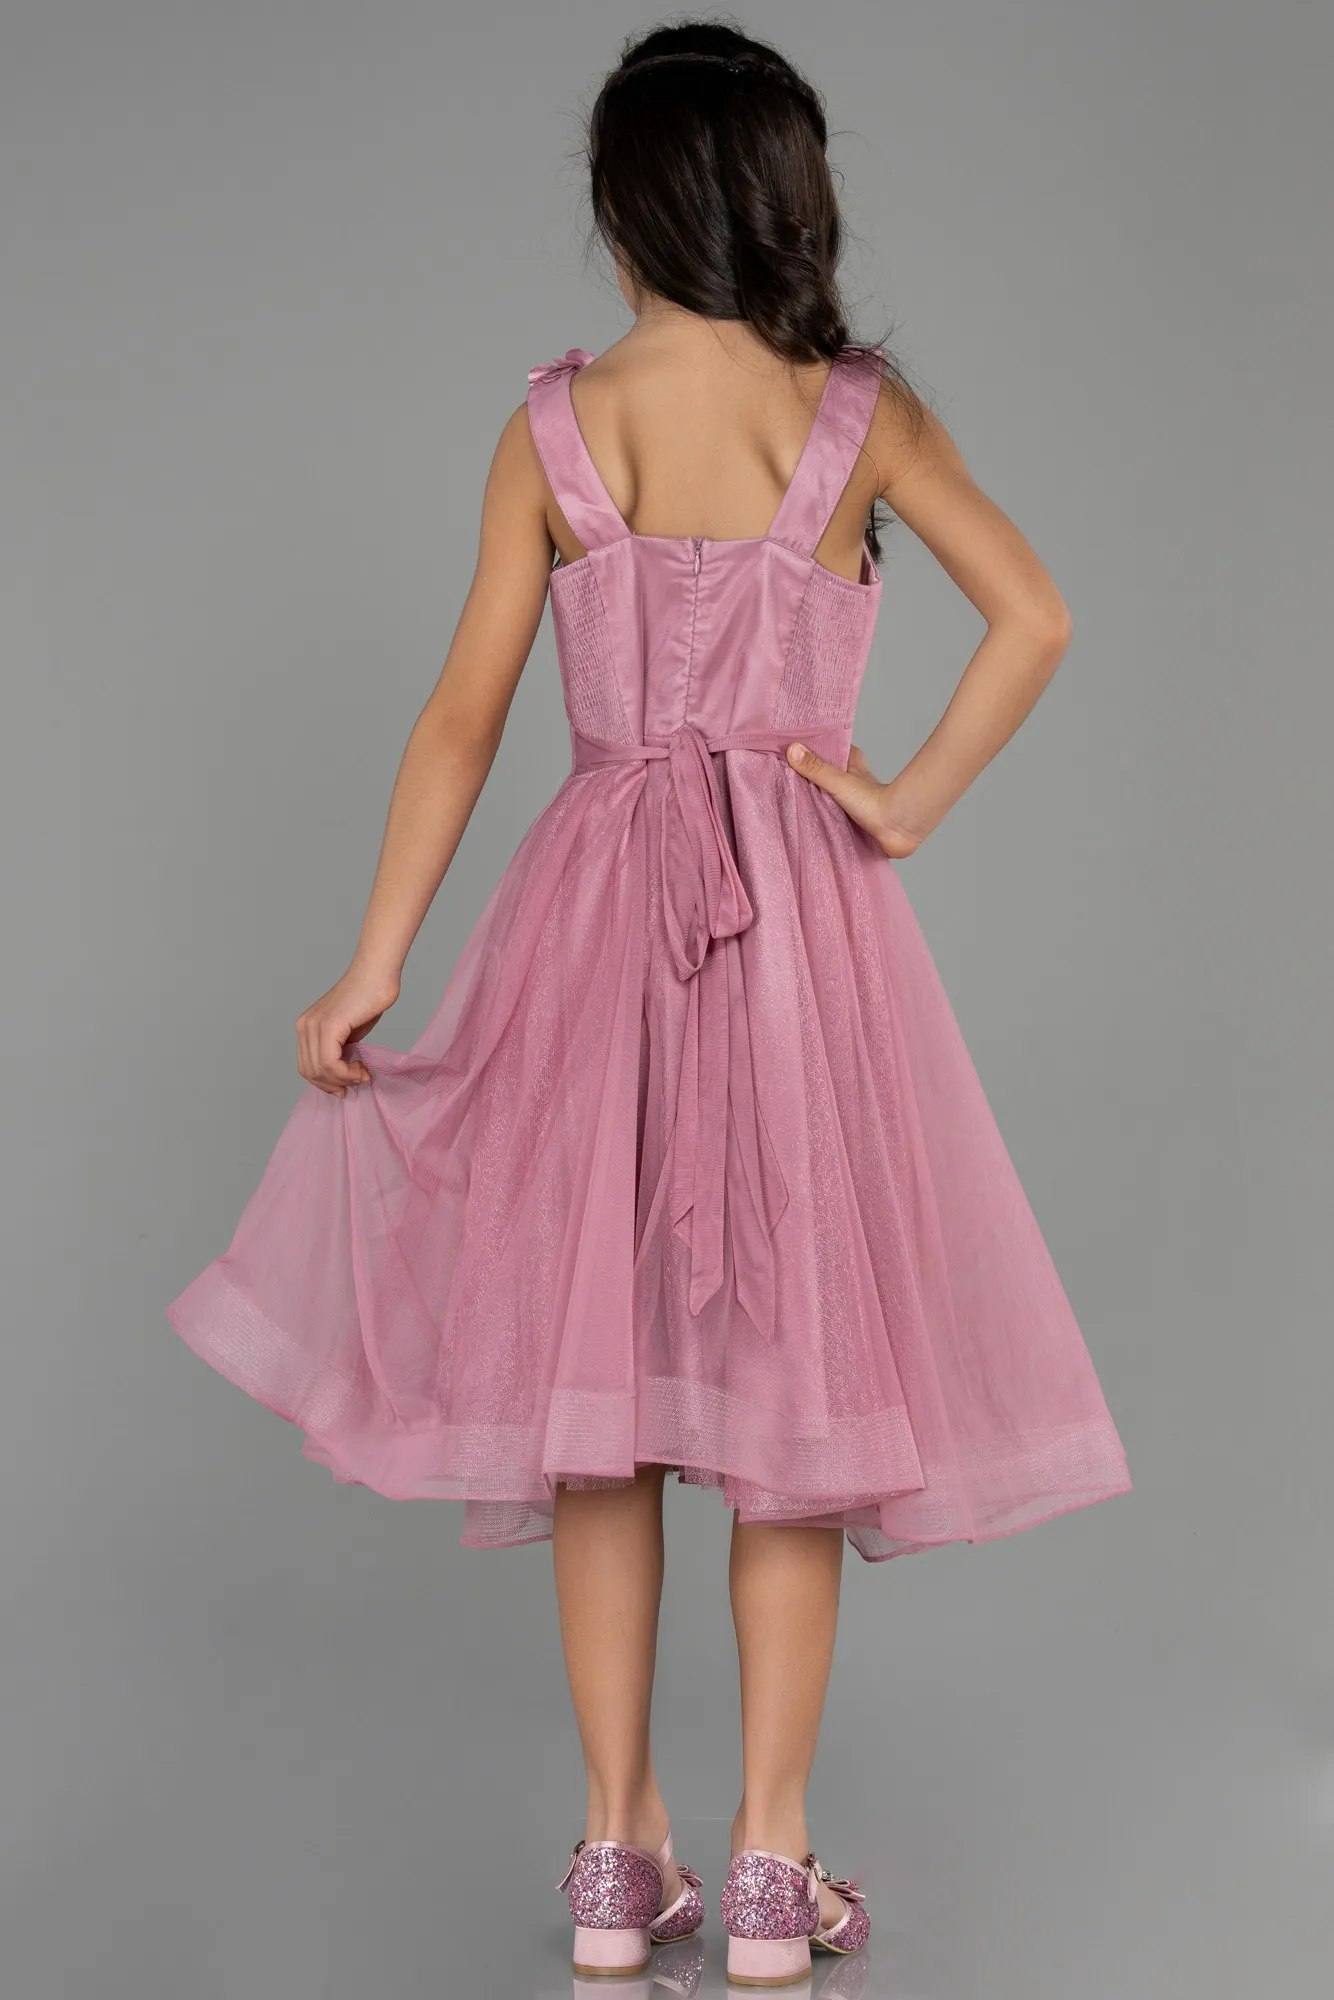 Rose Colored-Long Girl Dress ABU3727